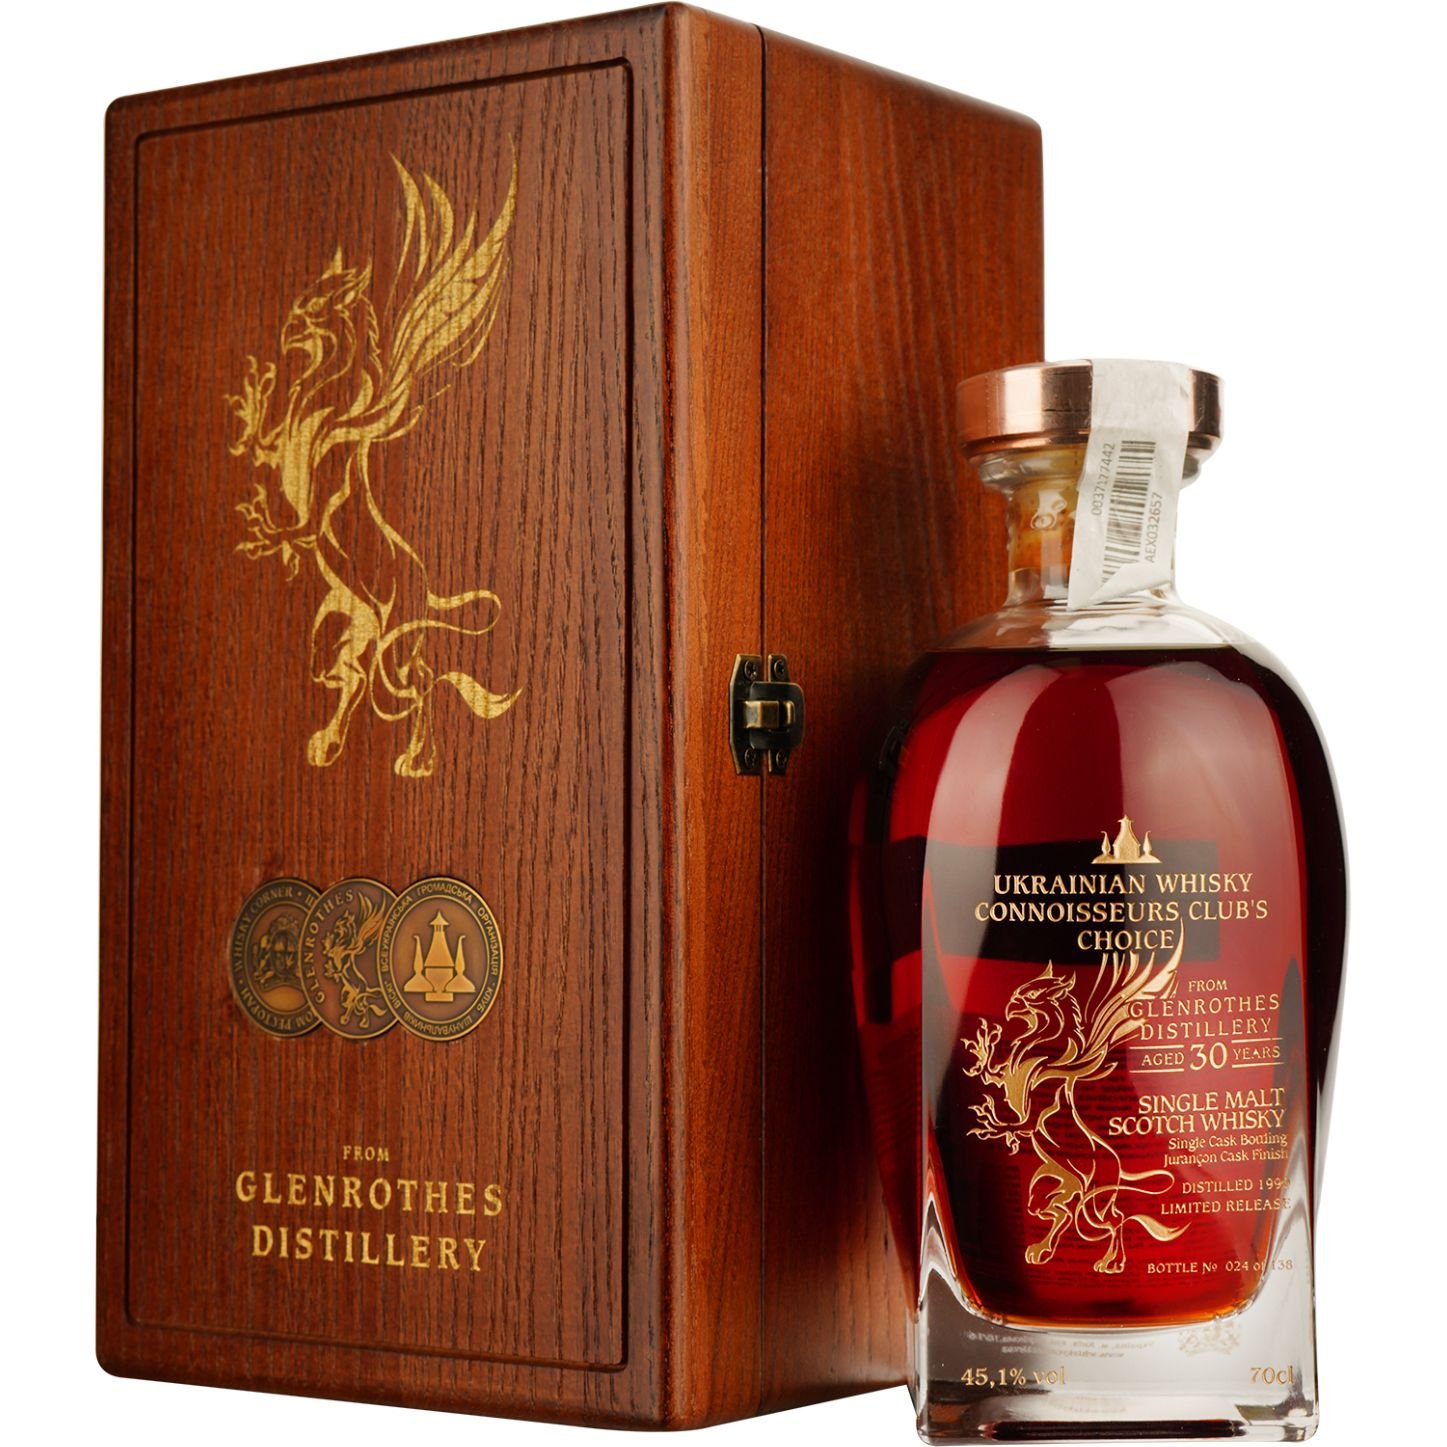 Виски Glenrothes 30 Years Old Jurancon Single Malt Scotch Whisky, в подарочной упаковке, 45,1%, 0,7 л - фото 1